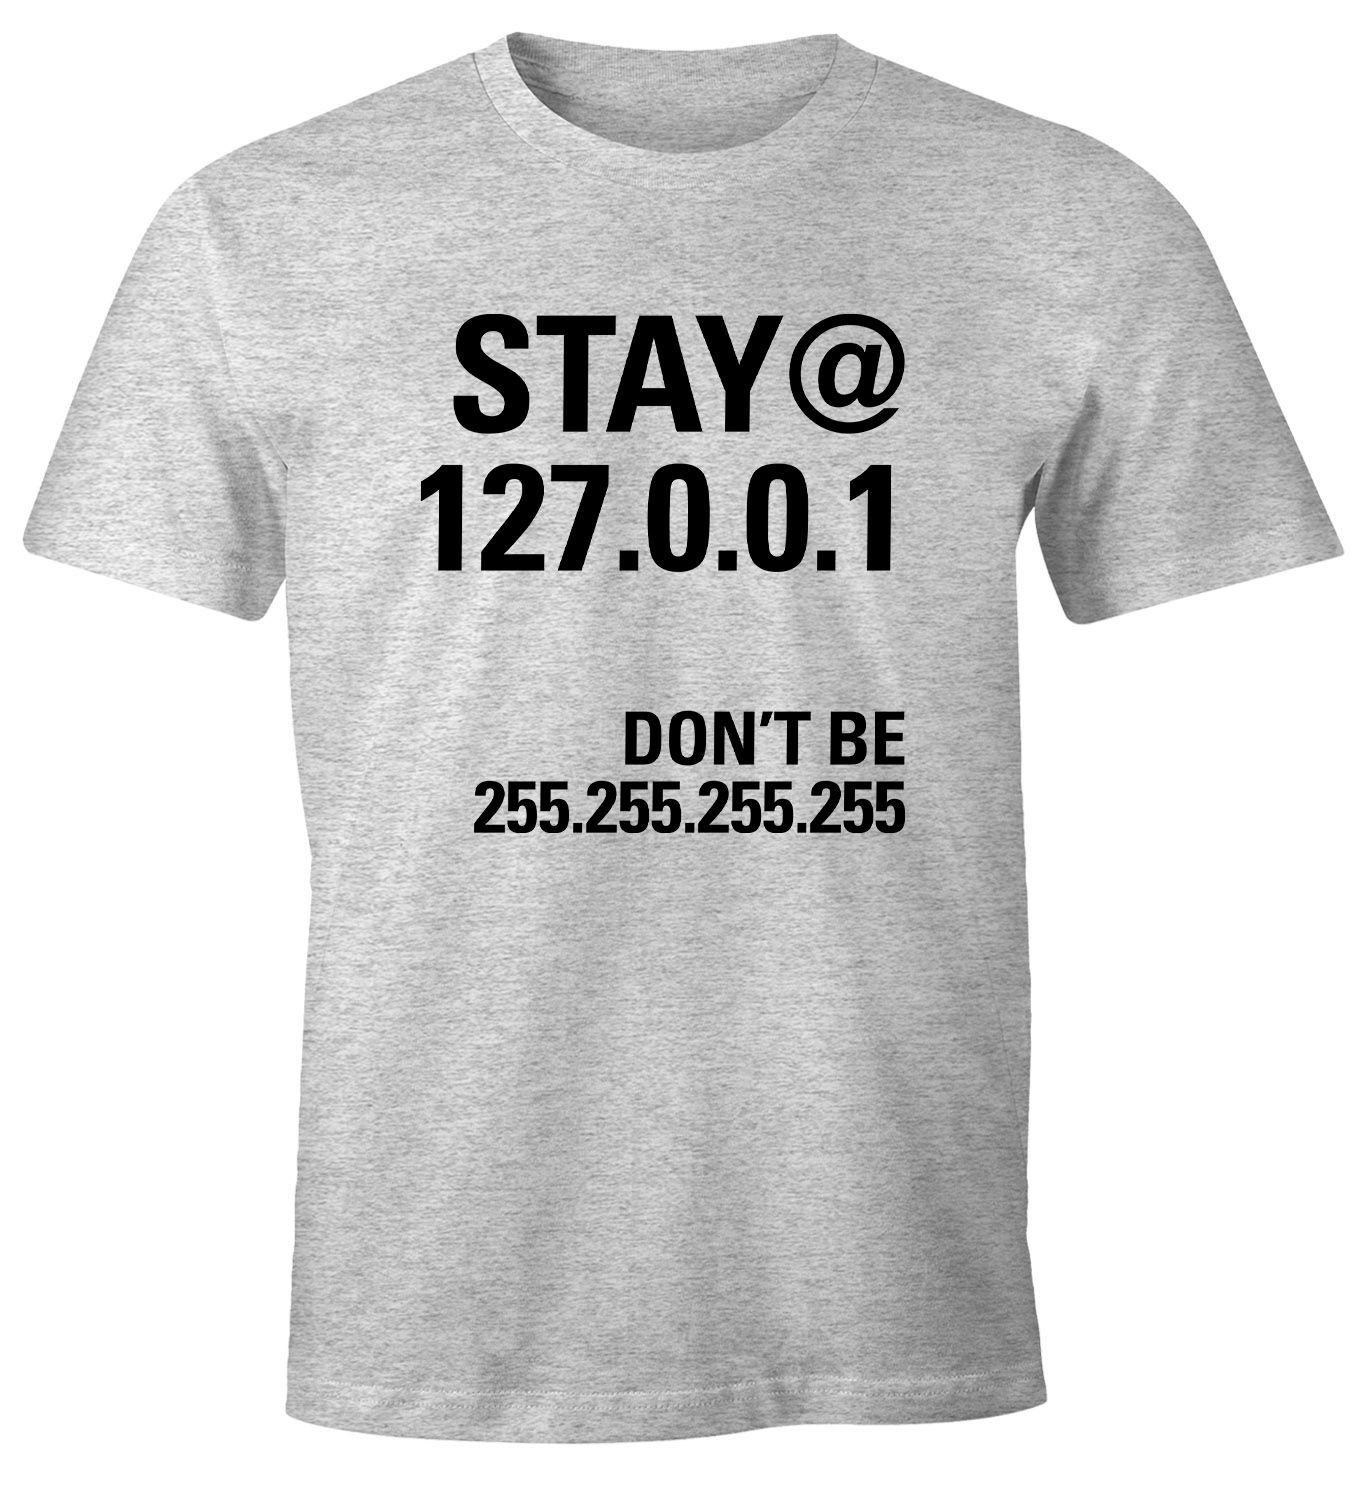 MoonWorks Print-Shirt Herren T-Shirt stay@home Virus Pandemie 127.0.0.1 Localhost Computer Nerd Coder Moonworks® mit Print